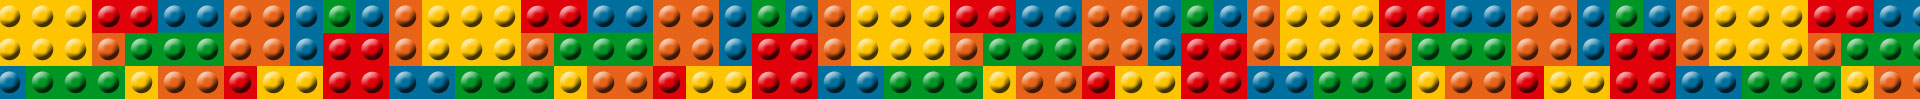 DeLorean Lego de Regreso al Futuro (21103)